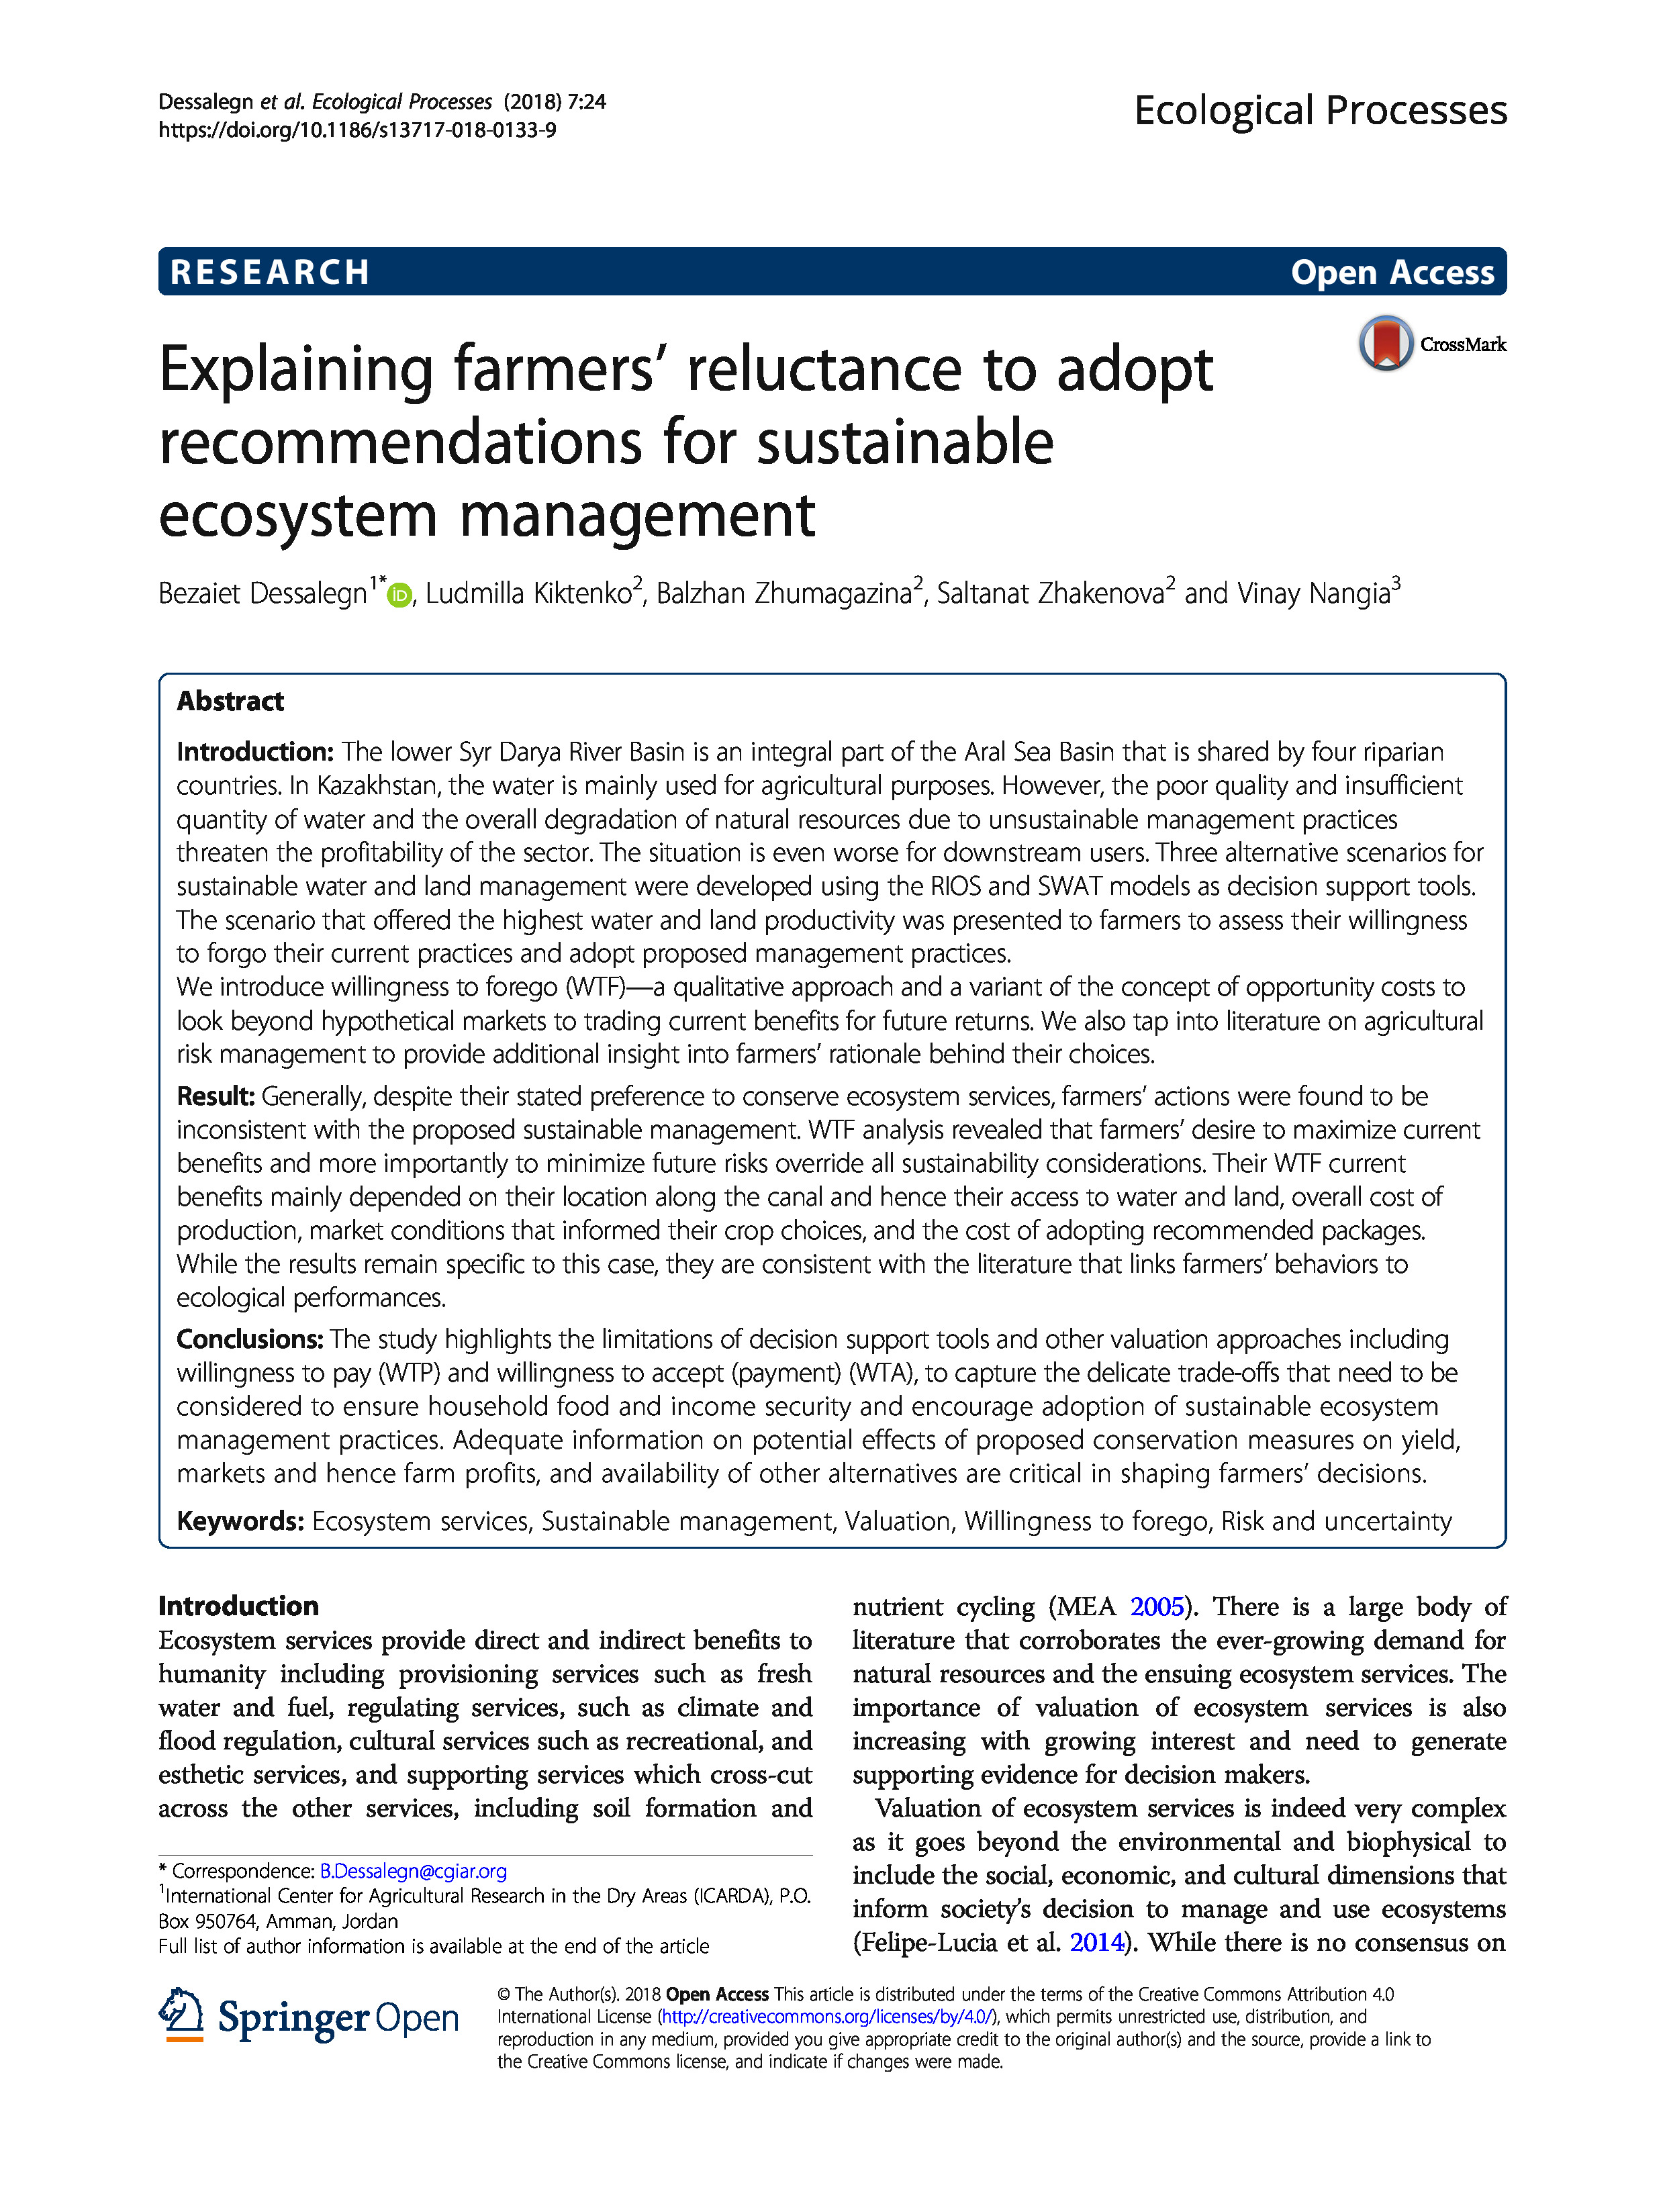 Explaining farmers’ reluctance to adopt recommendations for sustainable ecosystem management | B.Dessalegn, L.Kiktenko, B.Zhumagazina, S.Zhakenova, V.Nangia